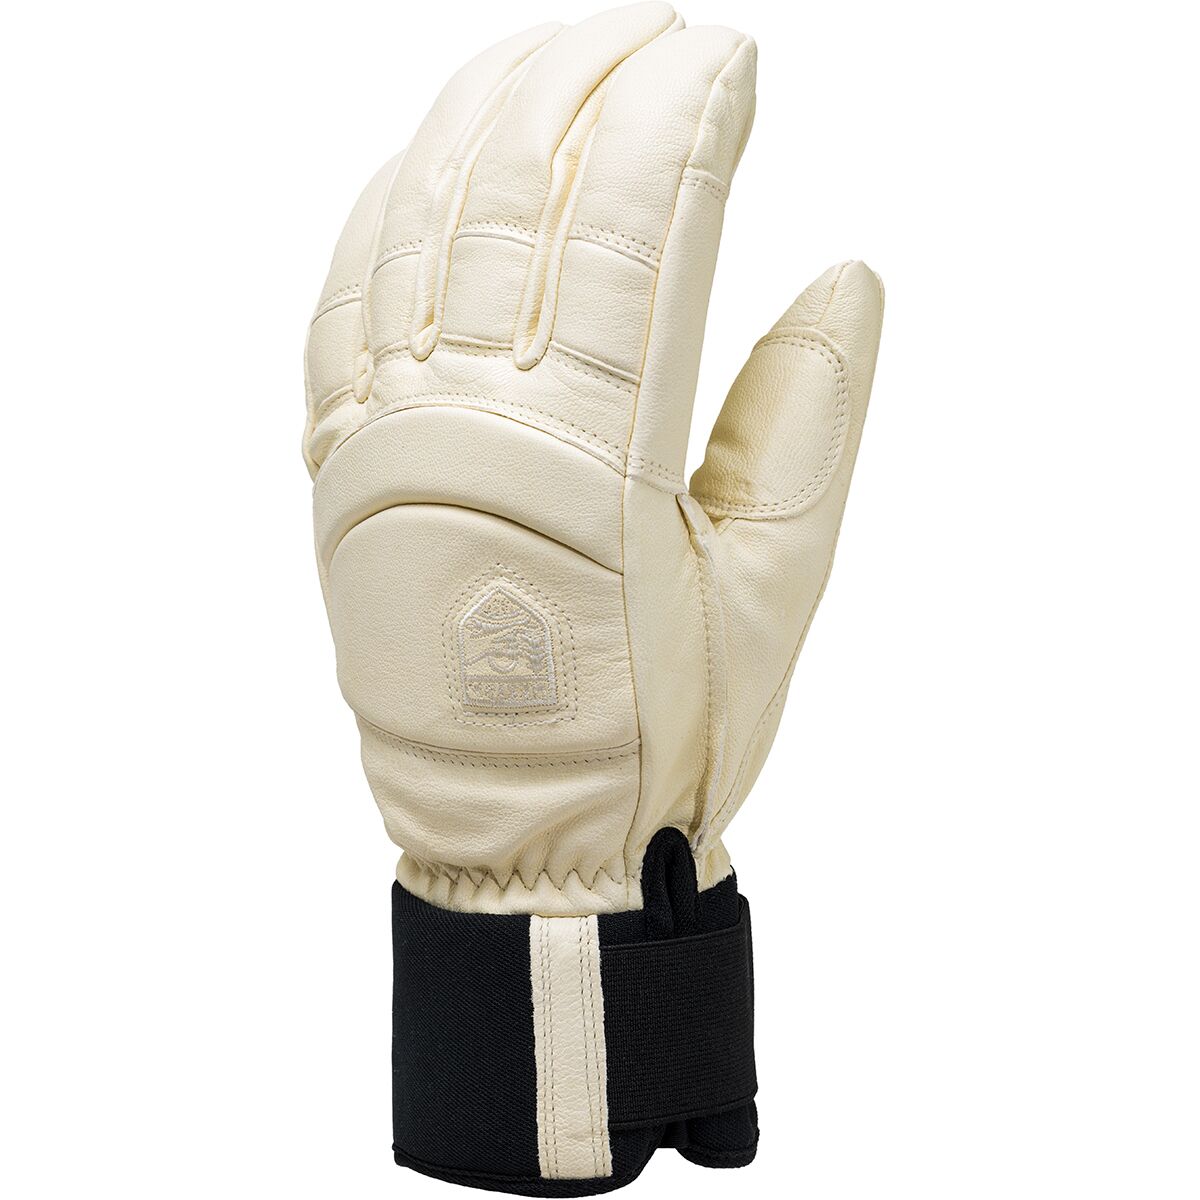 Hestra Fall Line Glove